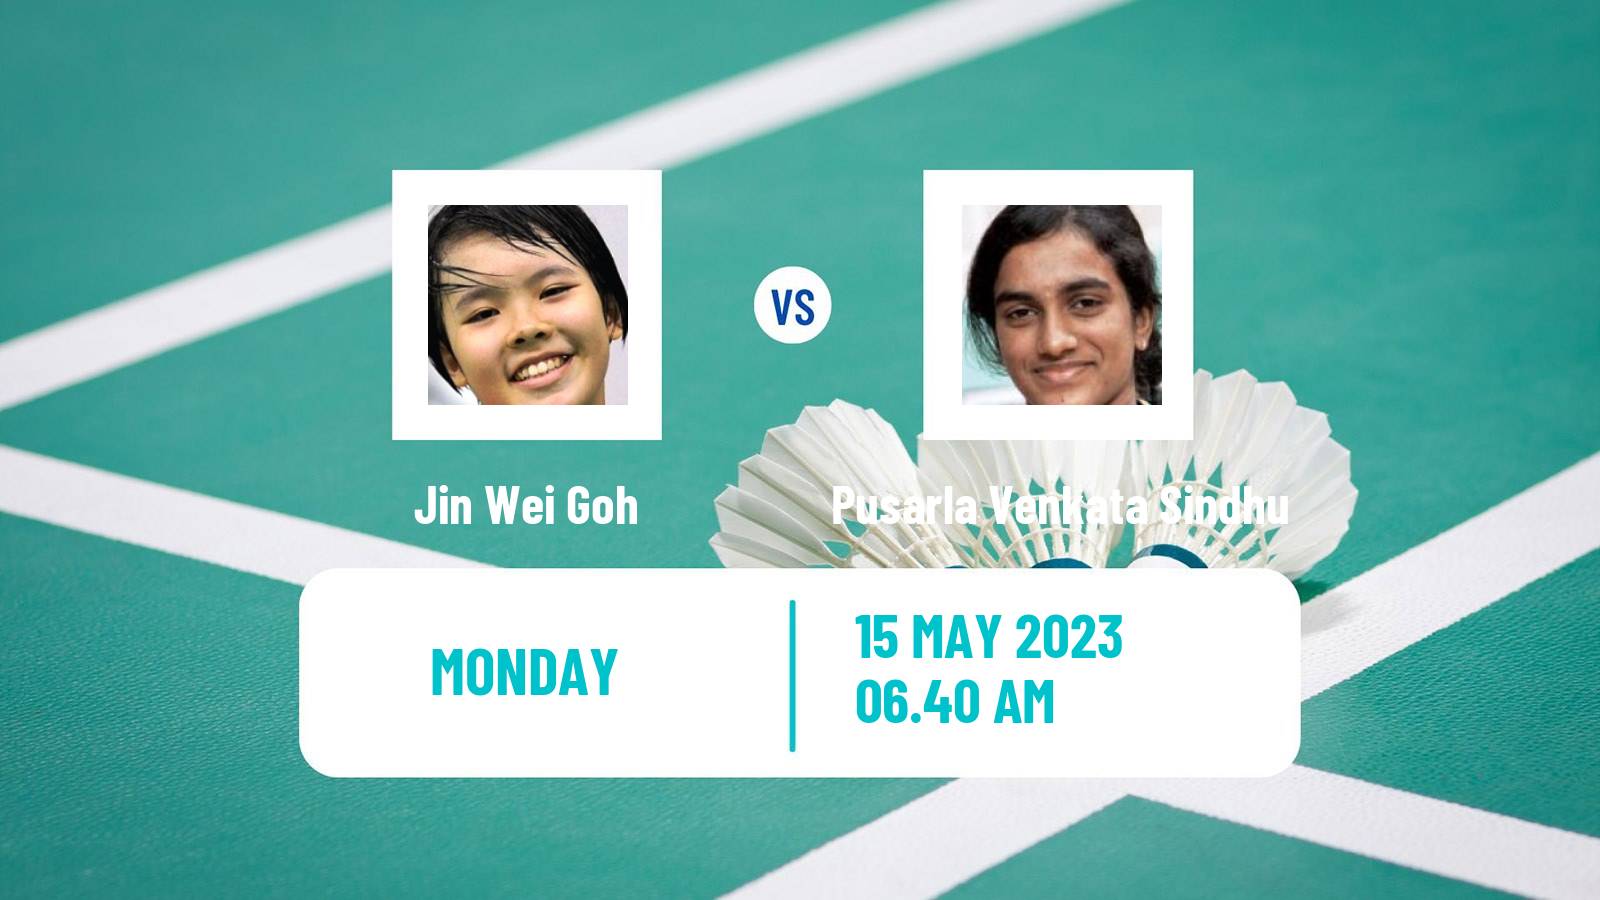 Badminton Badminton Jin Wei Goh - Pusarla Venkata Sindhu